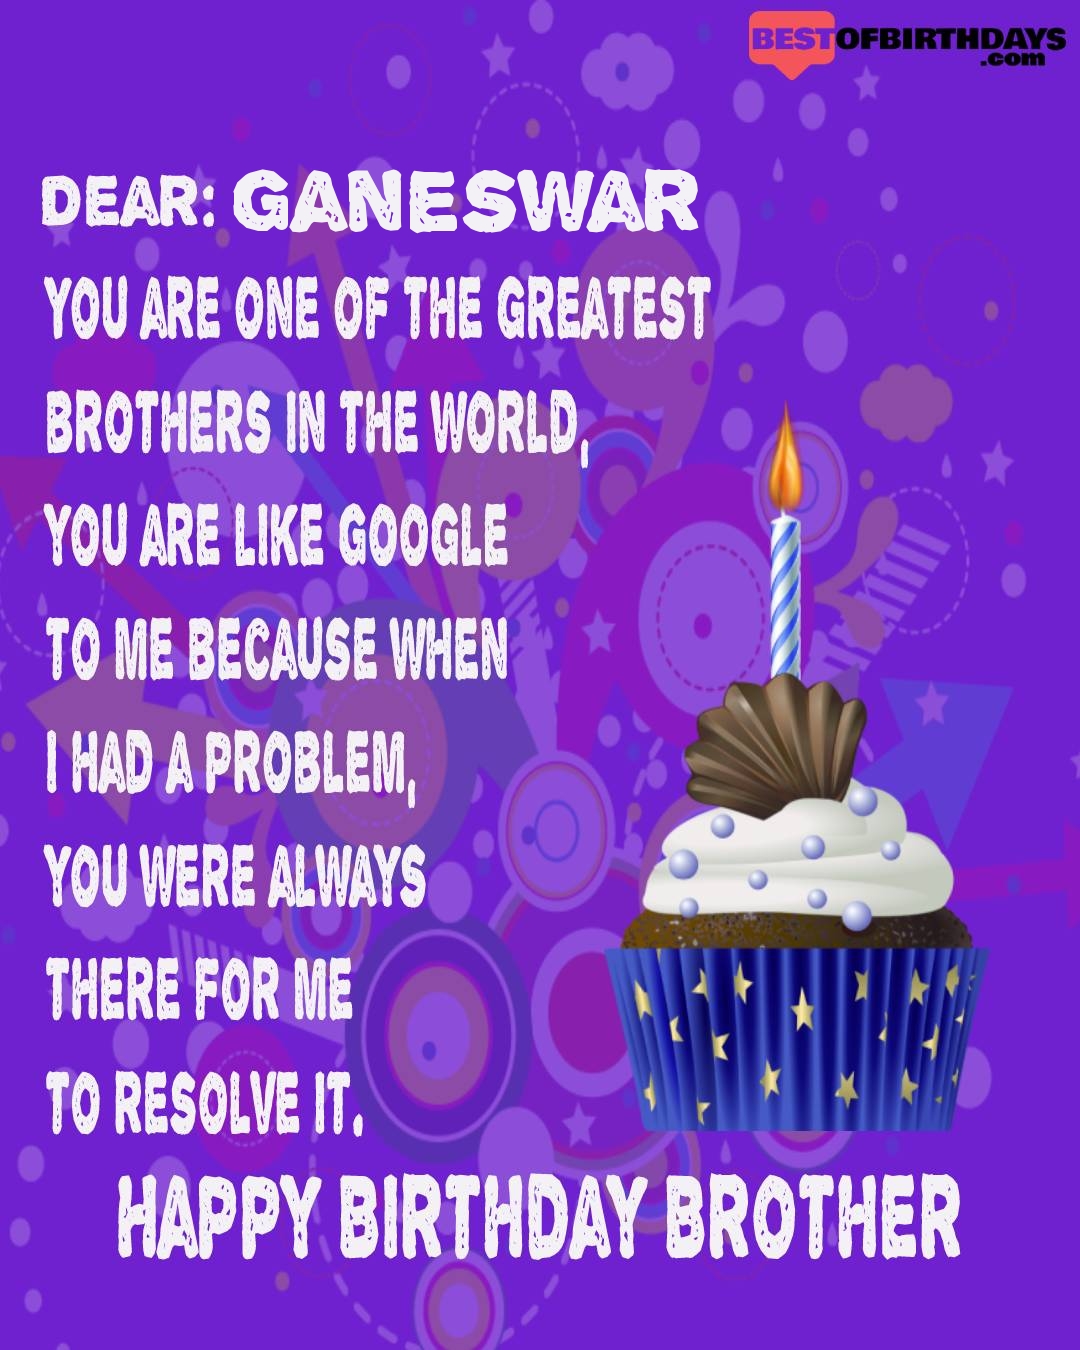 Happy birthday ganeswar bhai brother bro